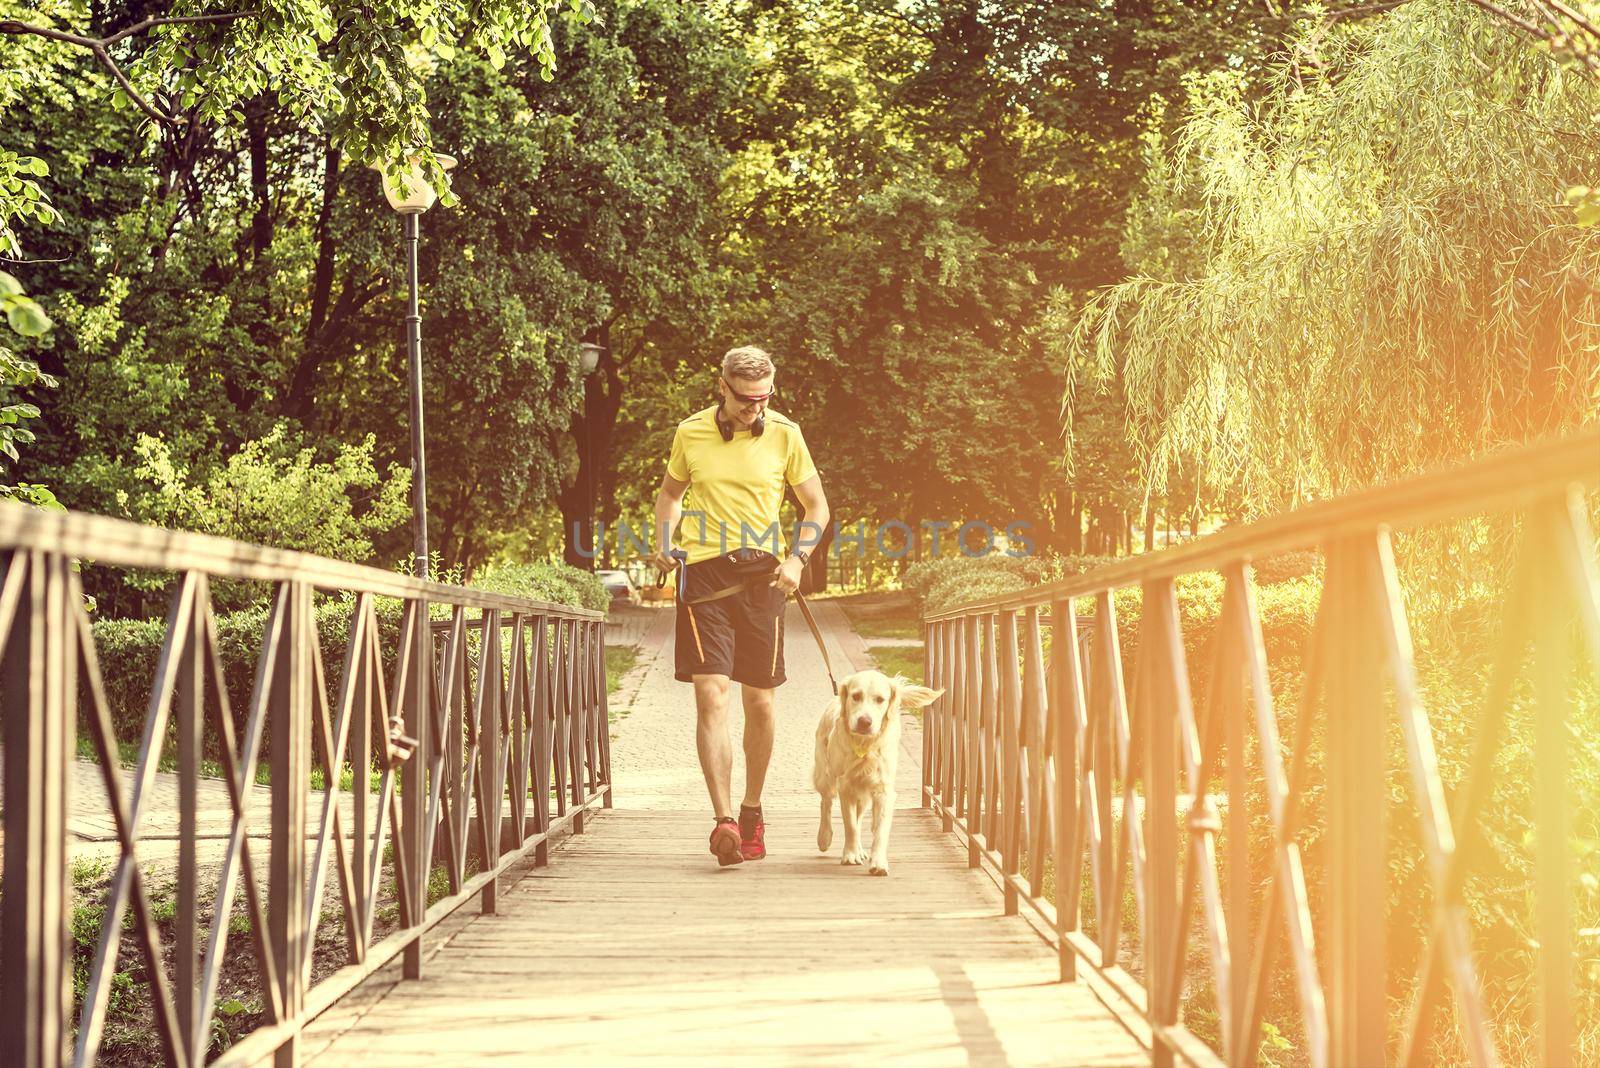 Man running across bridge with golden retriever during training in park